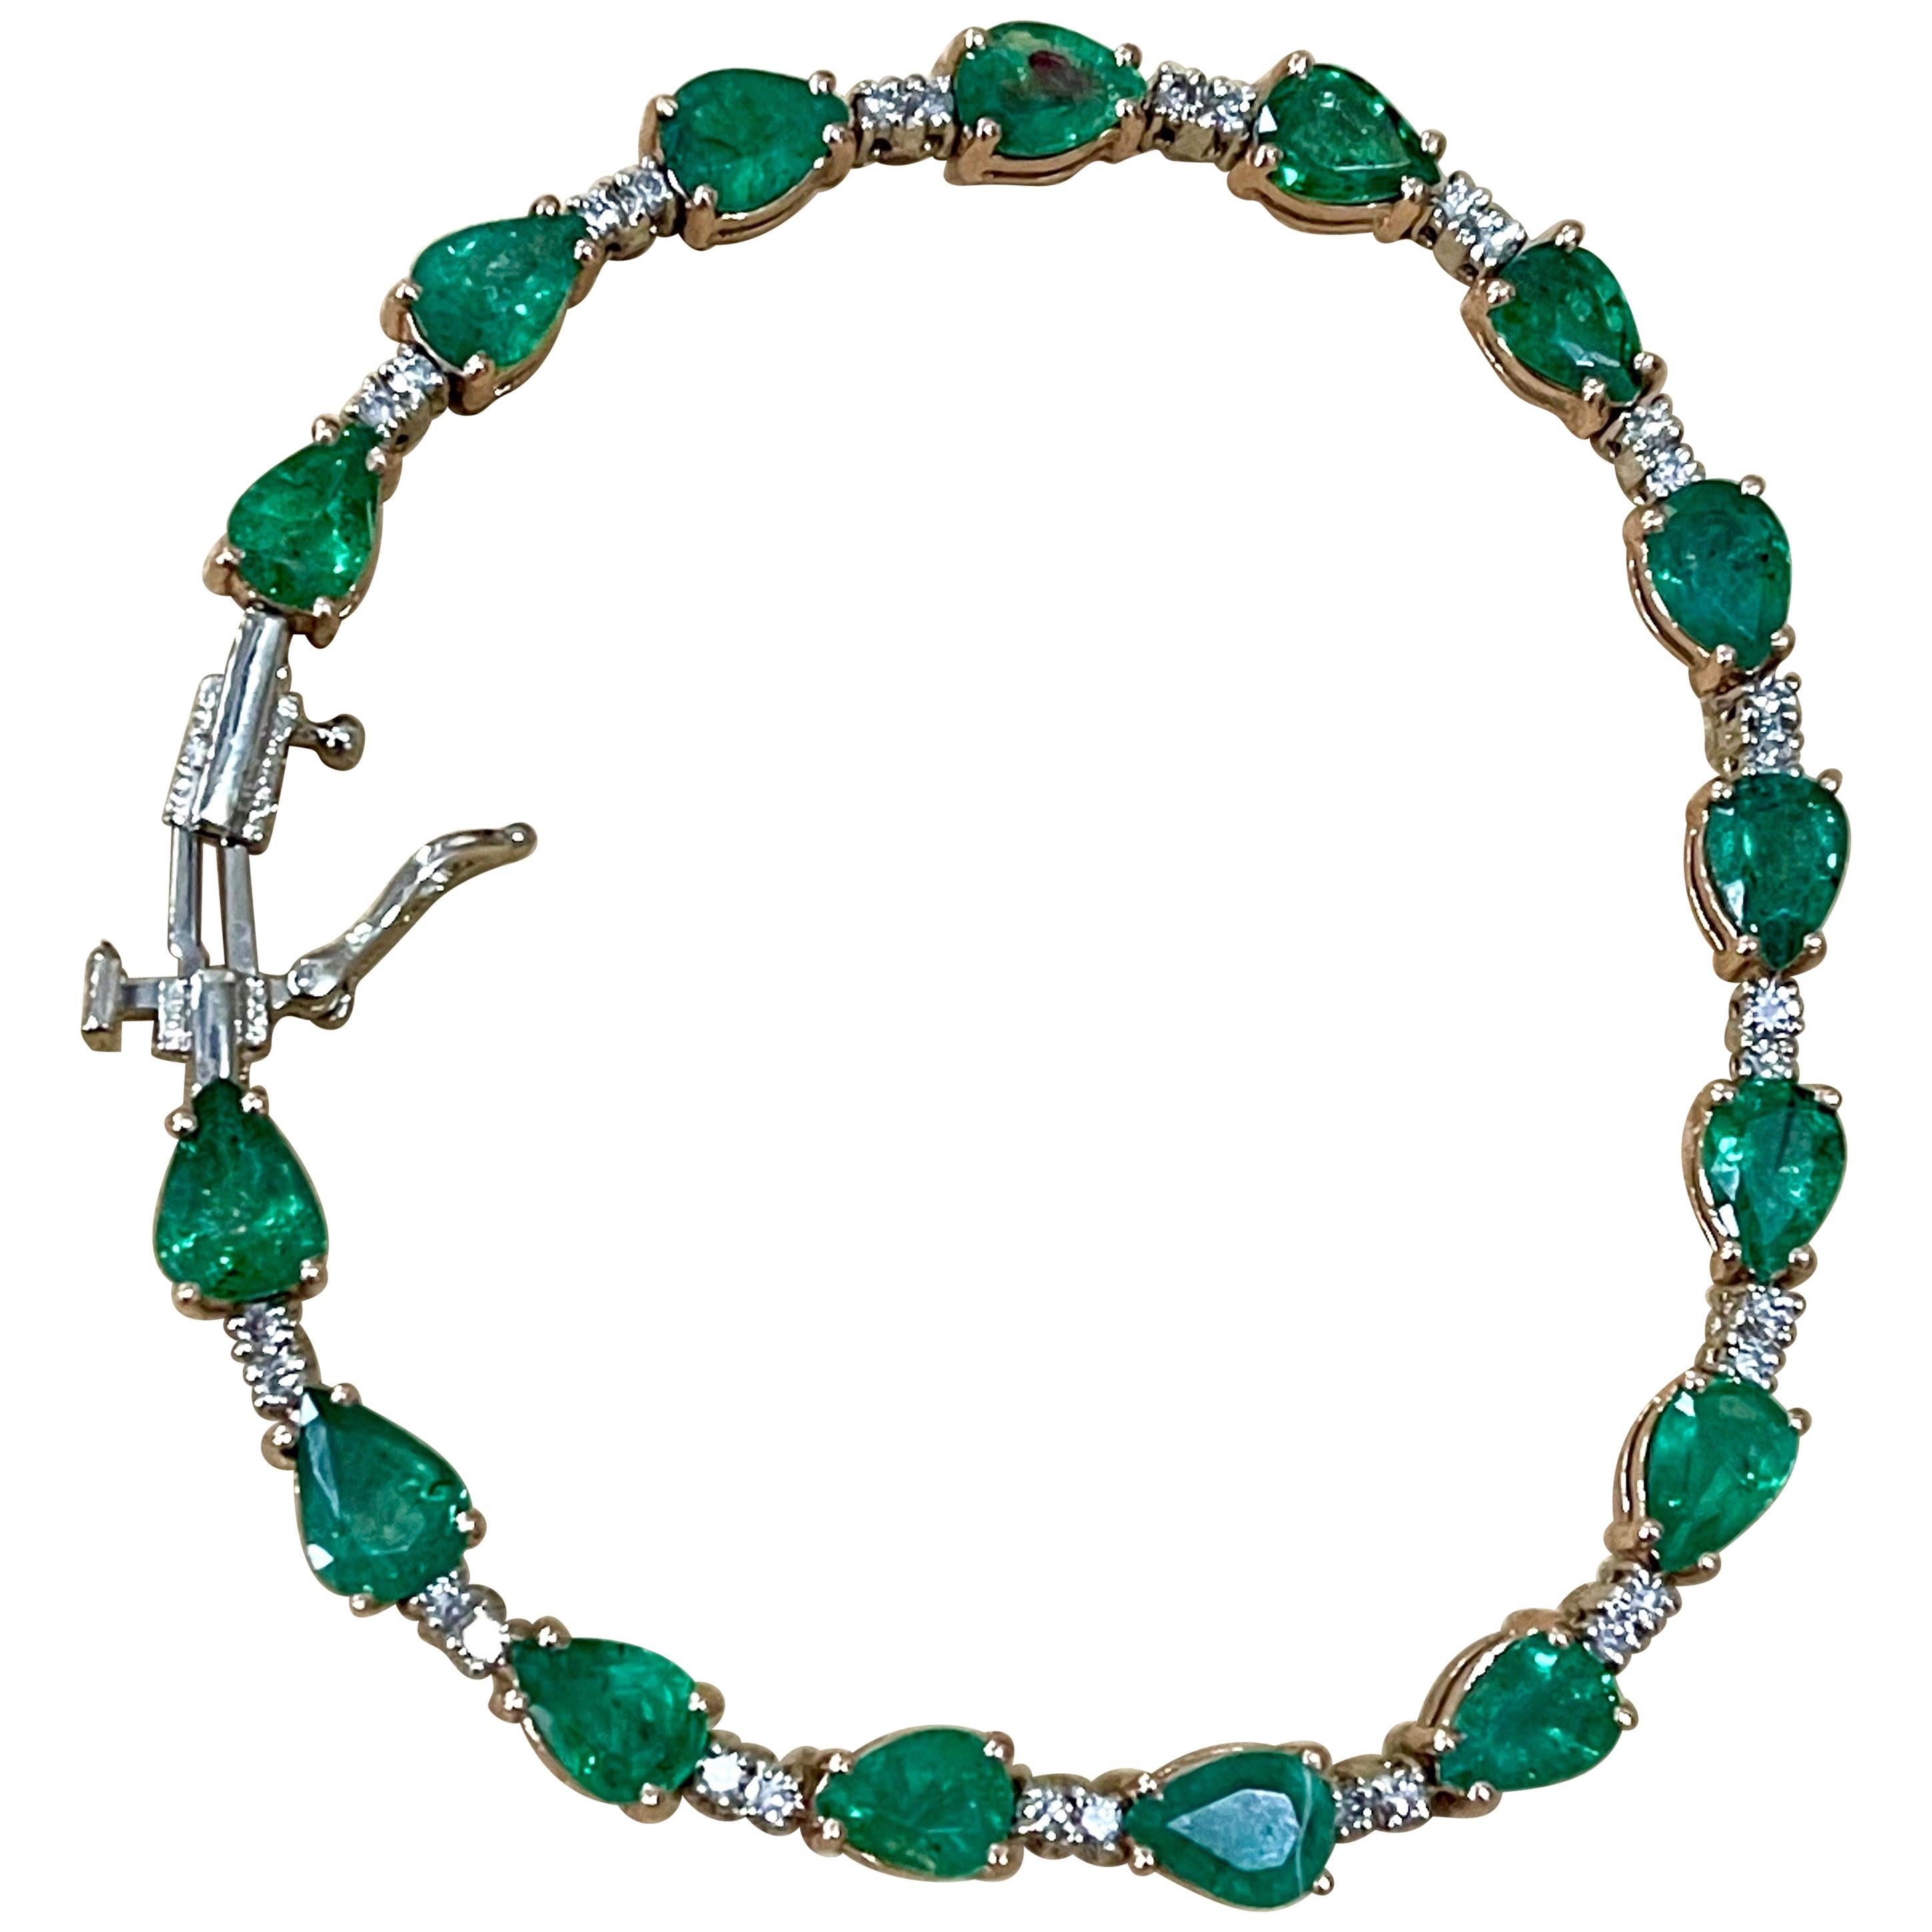 13 Carat Natural Zambian Emerald and Diamond Tennis Bracelet 14 Karat White Gold